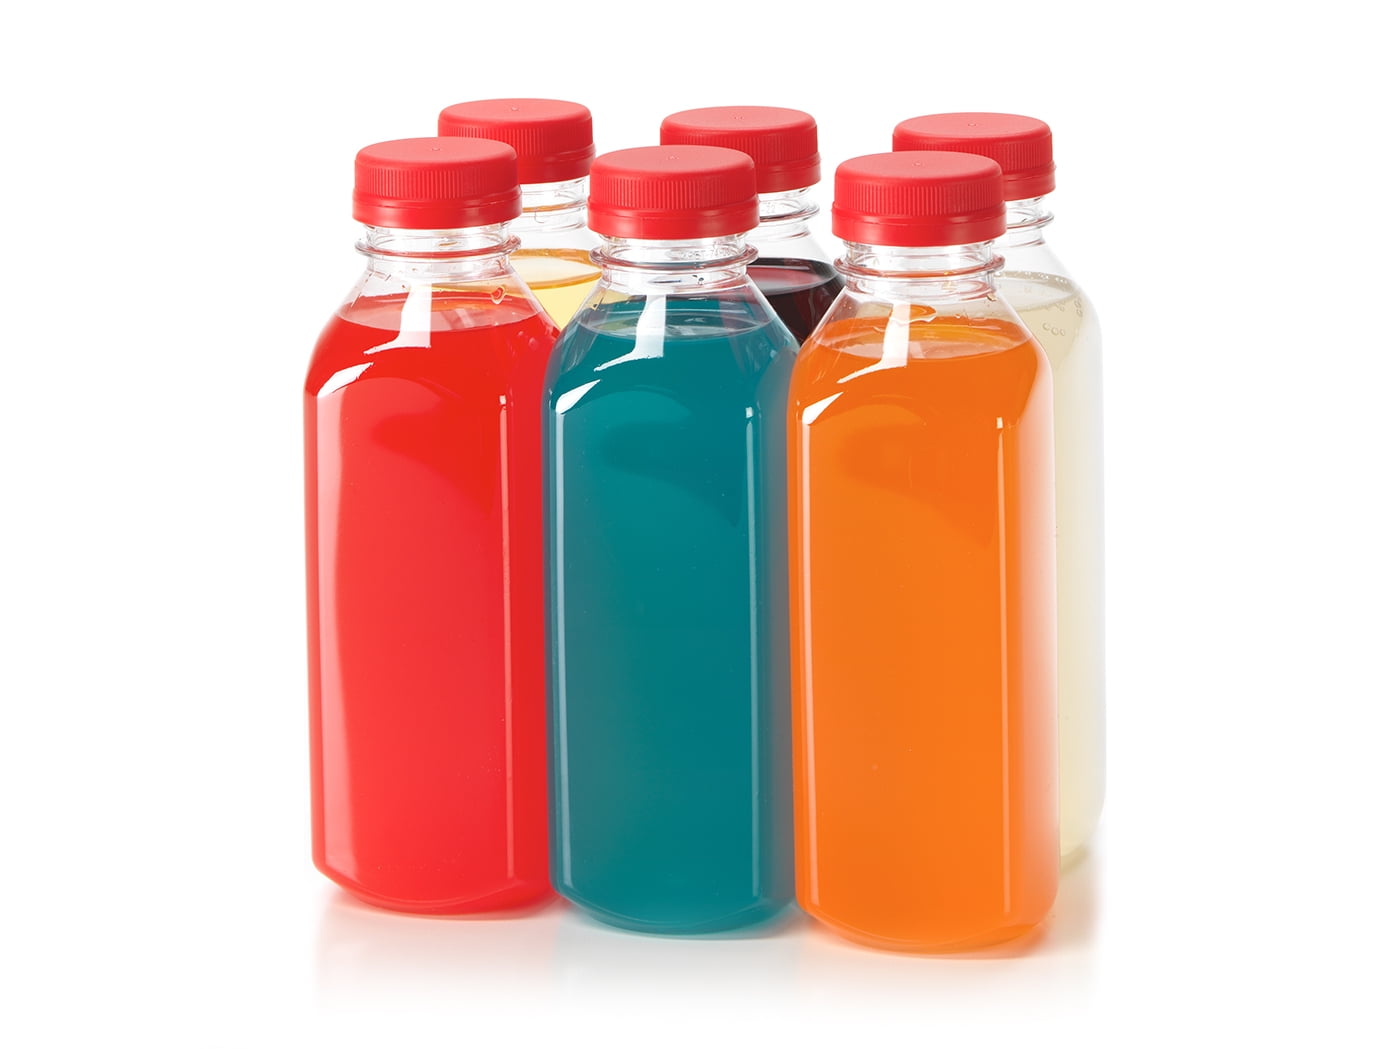 16 oz. Plastic Bottles with Green Tamper Evident Caps, 6-pack